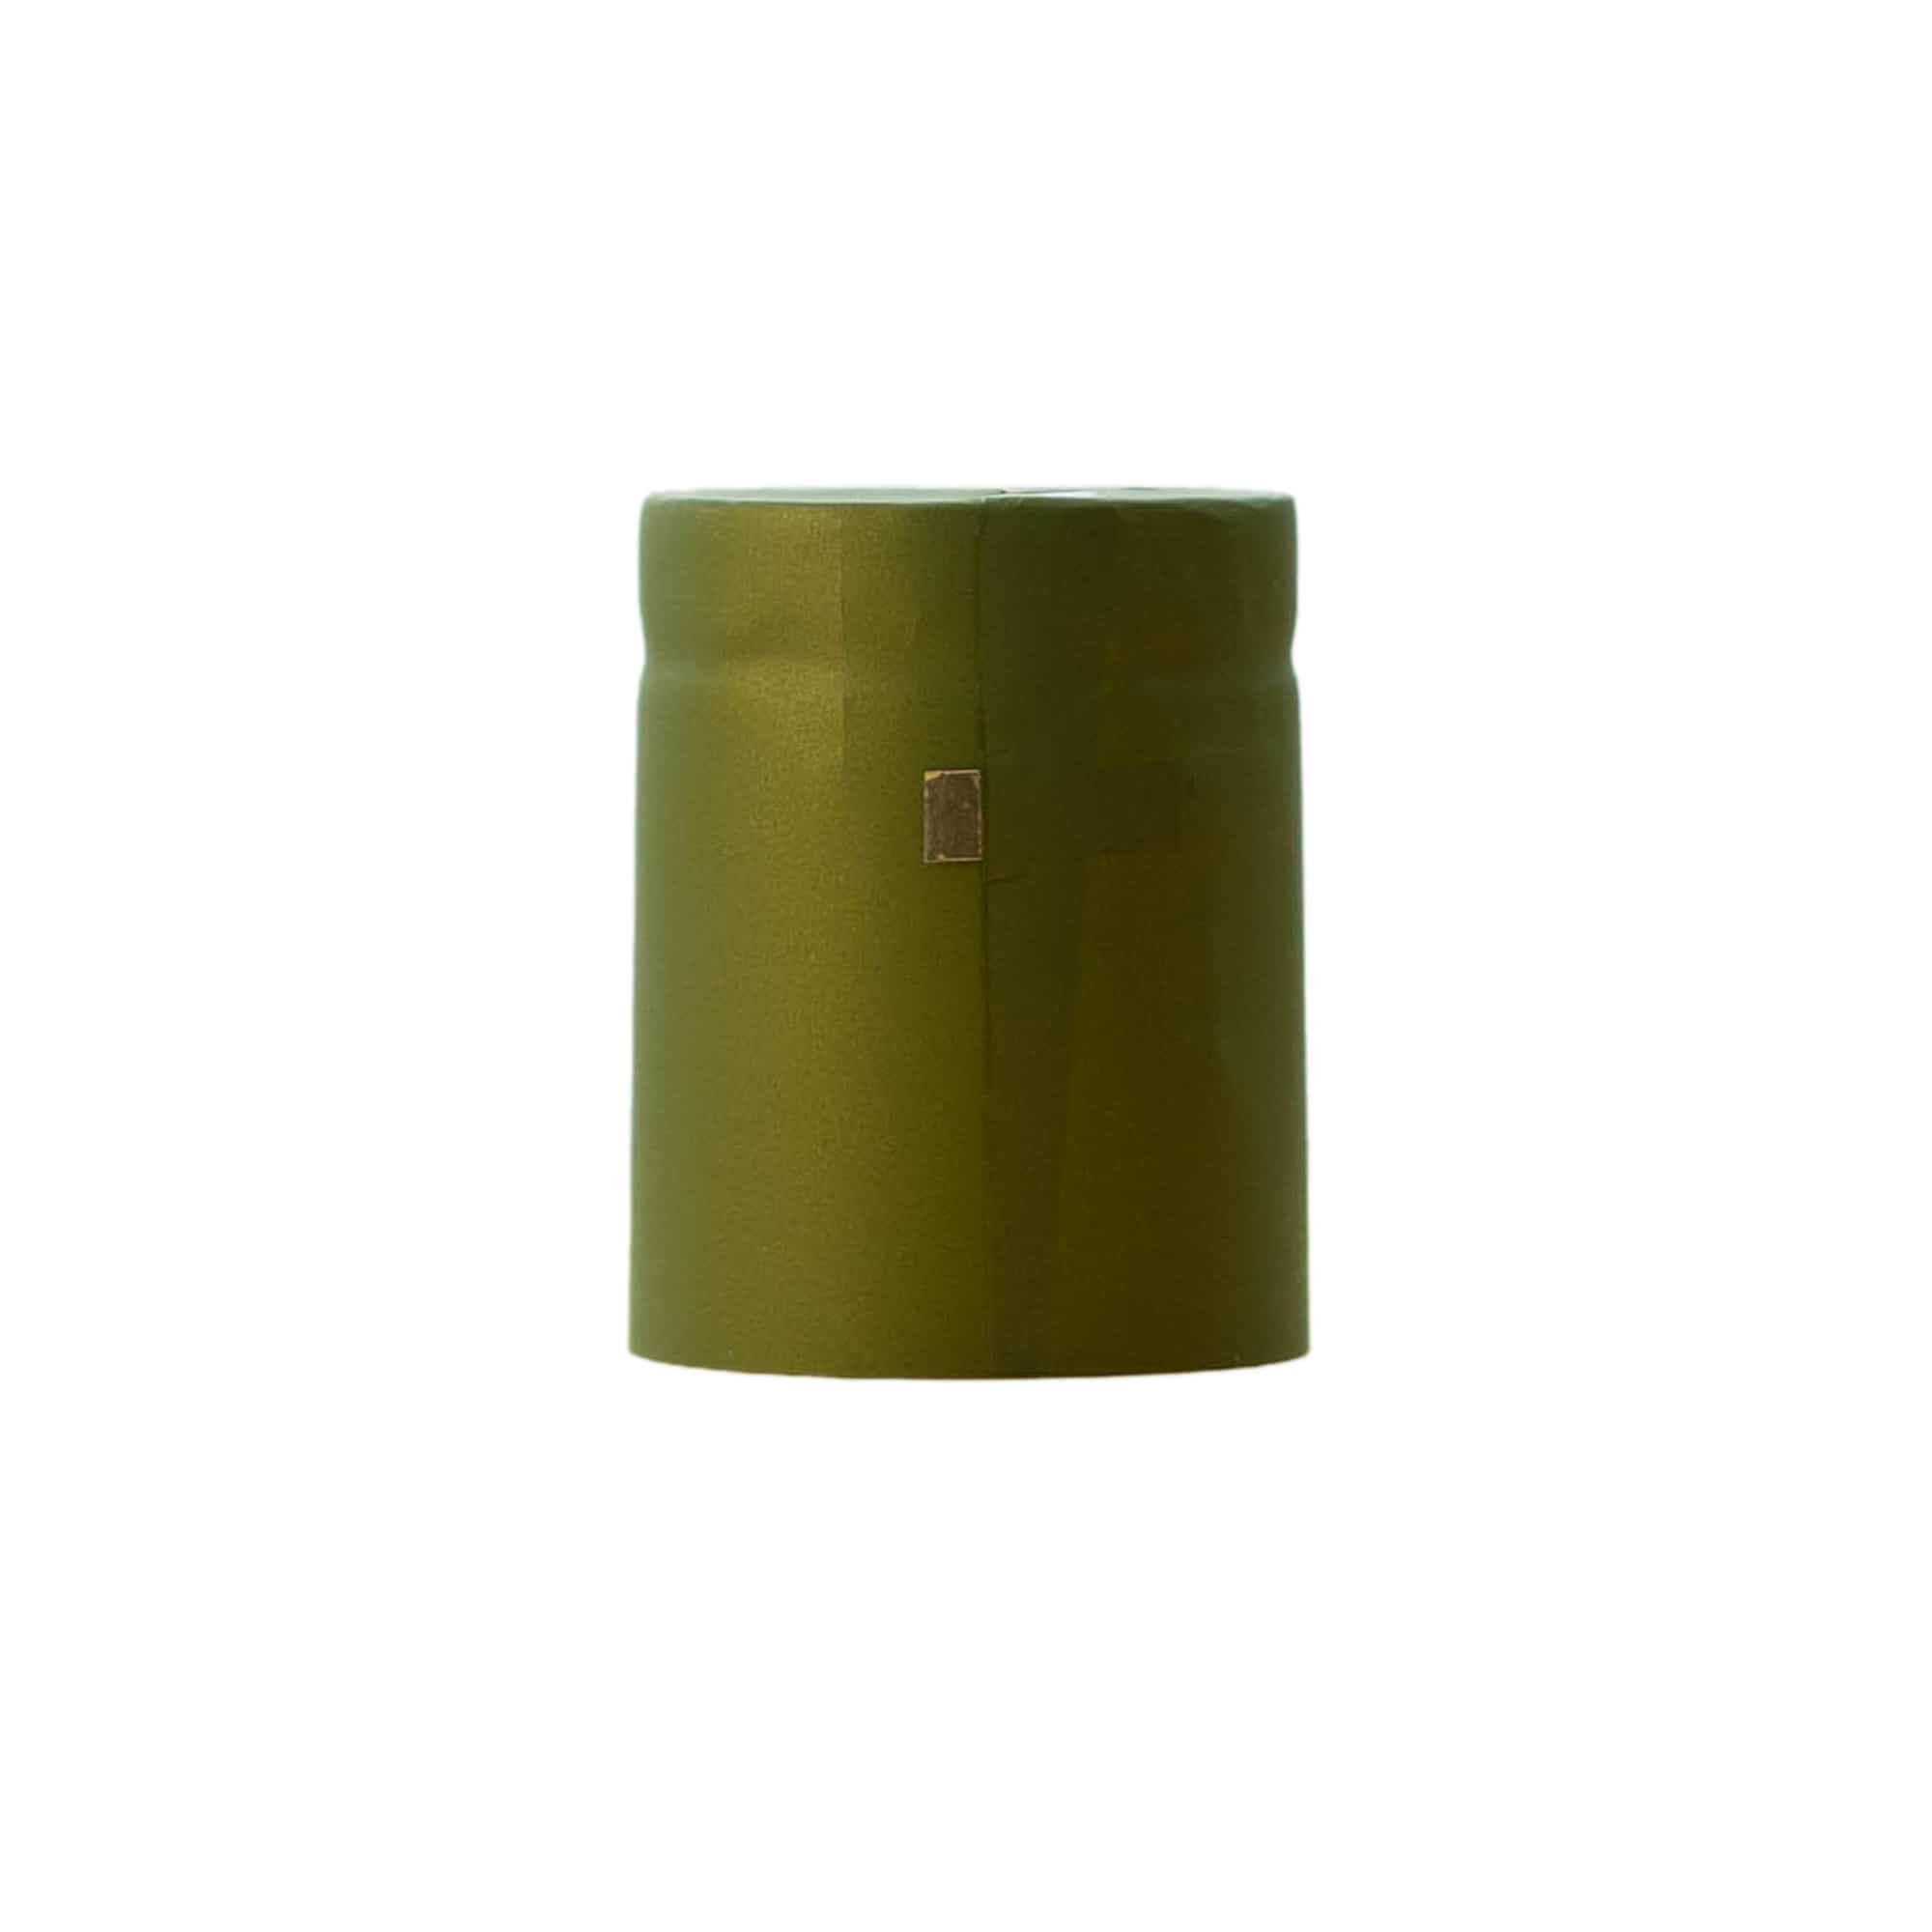 Heat shrink capsule 32x41, PVC plastic, olive green